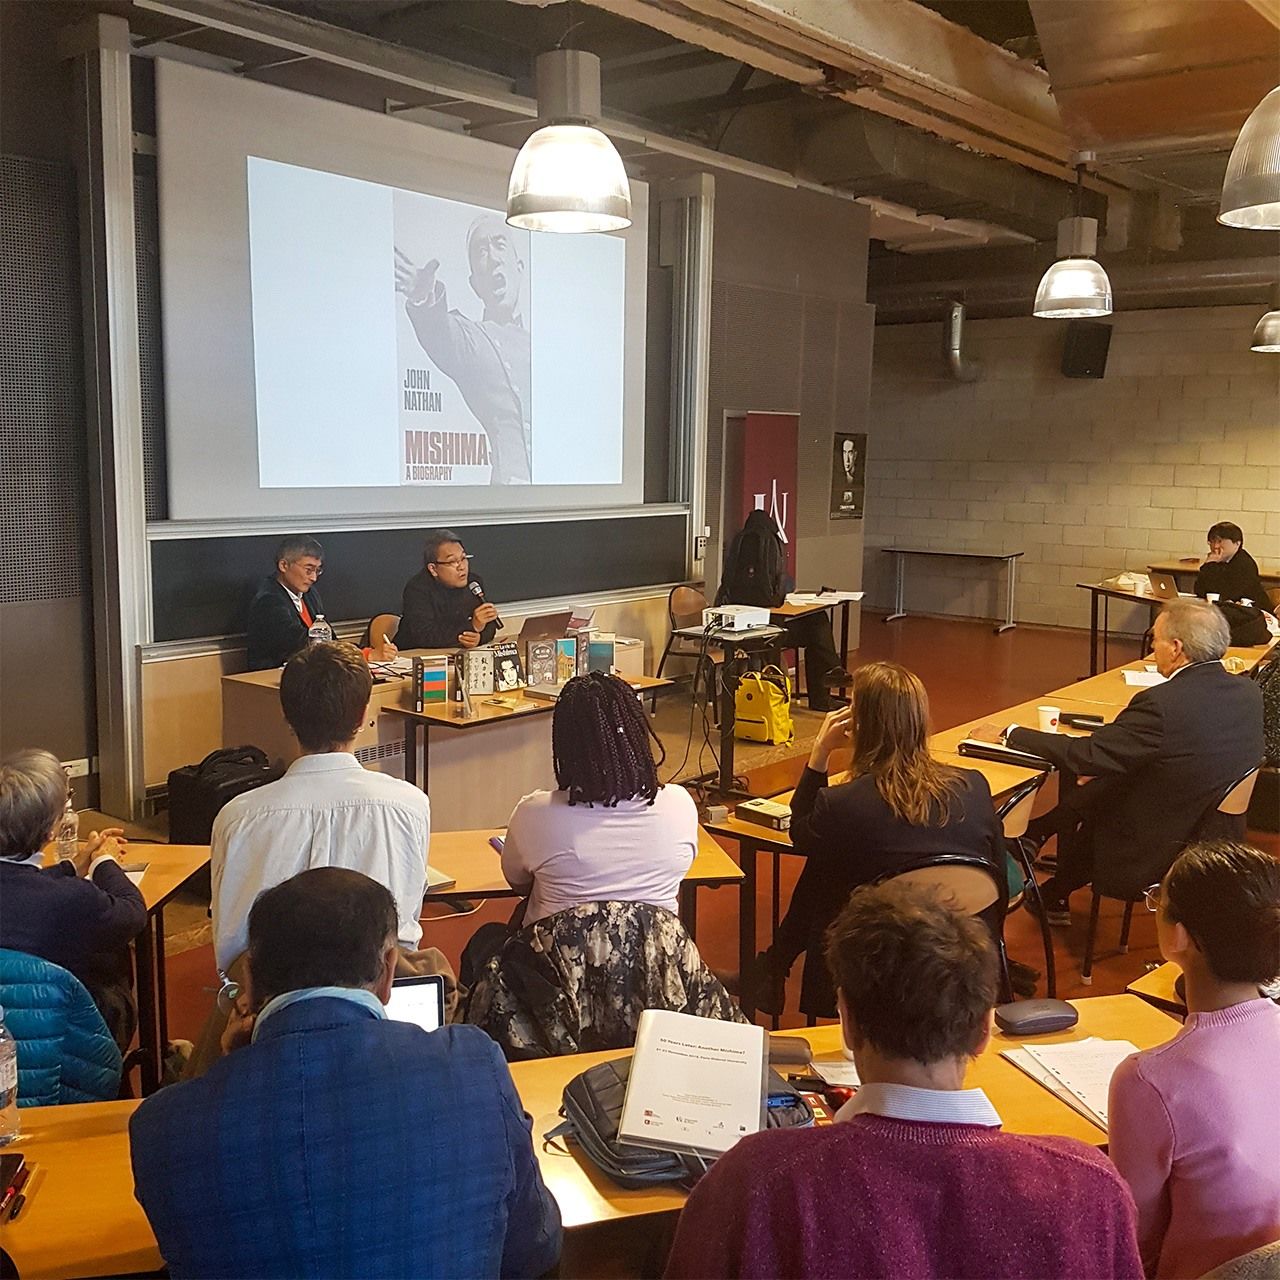 A three-day international Mishima Yukio symposium held at Paris Diderot University from November 21, 2019. (© Jérémy Marcellin)